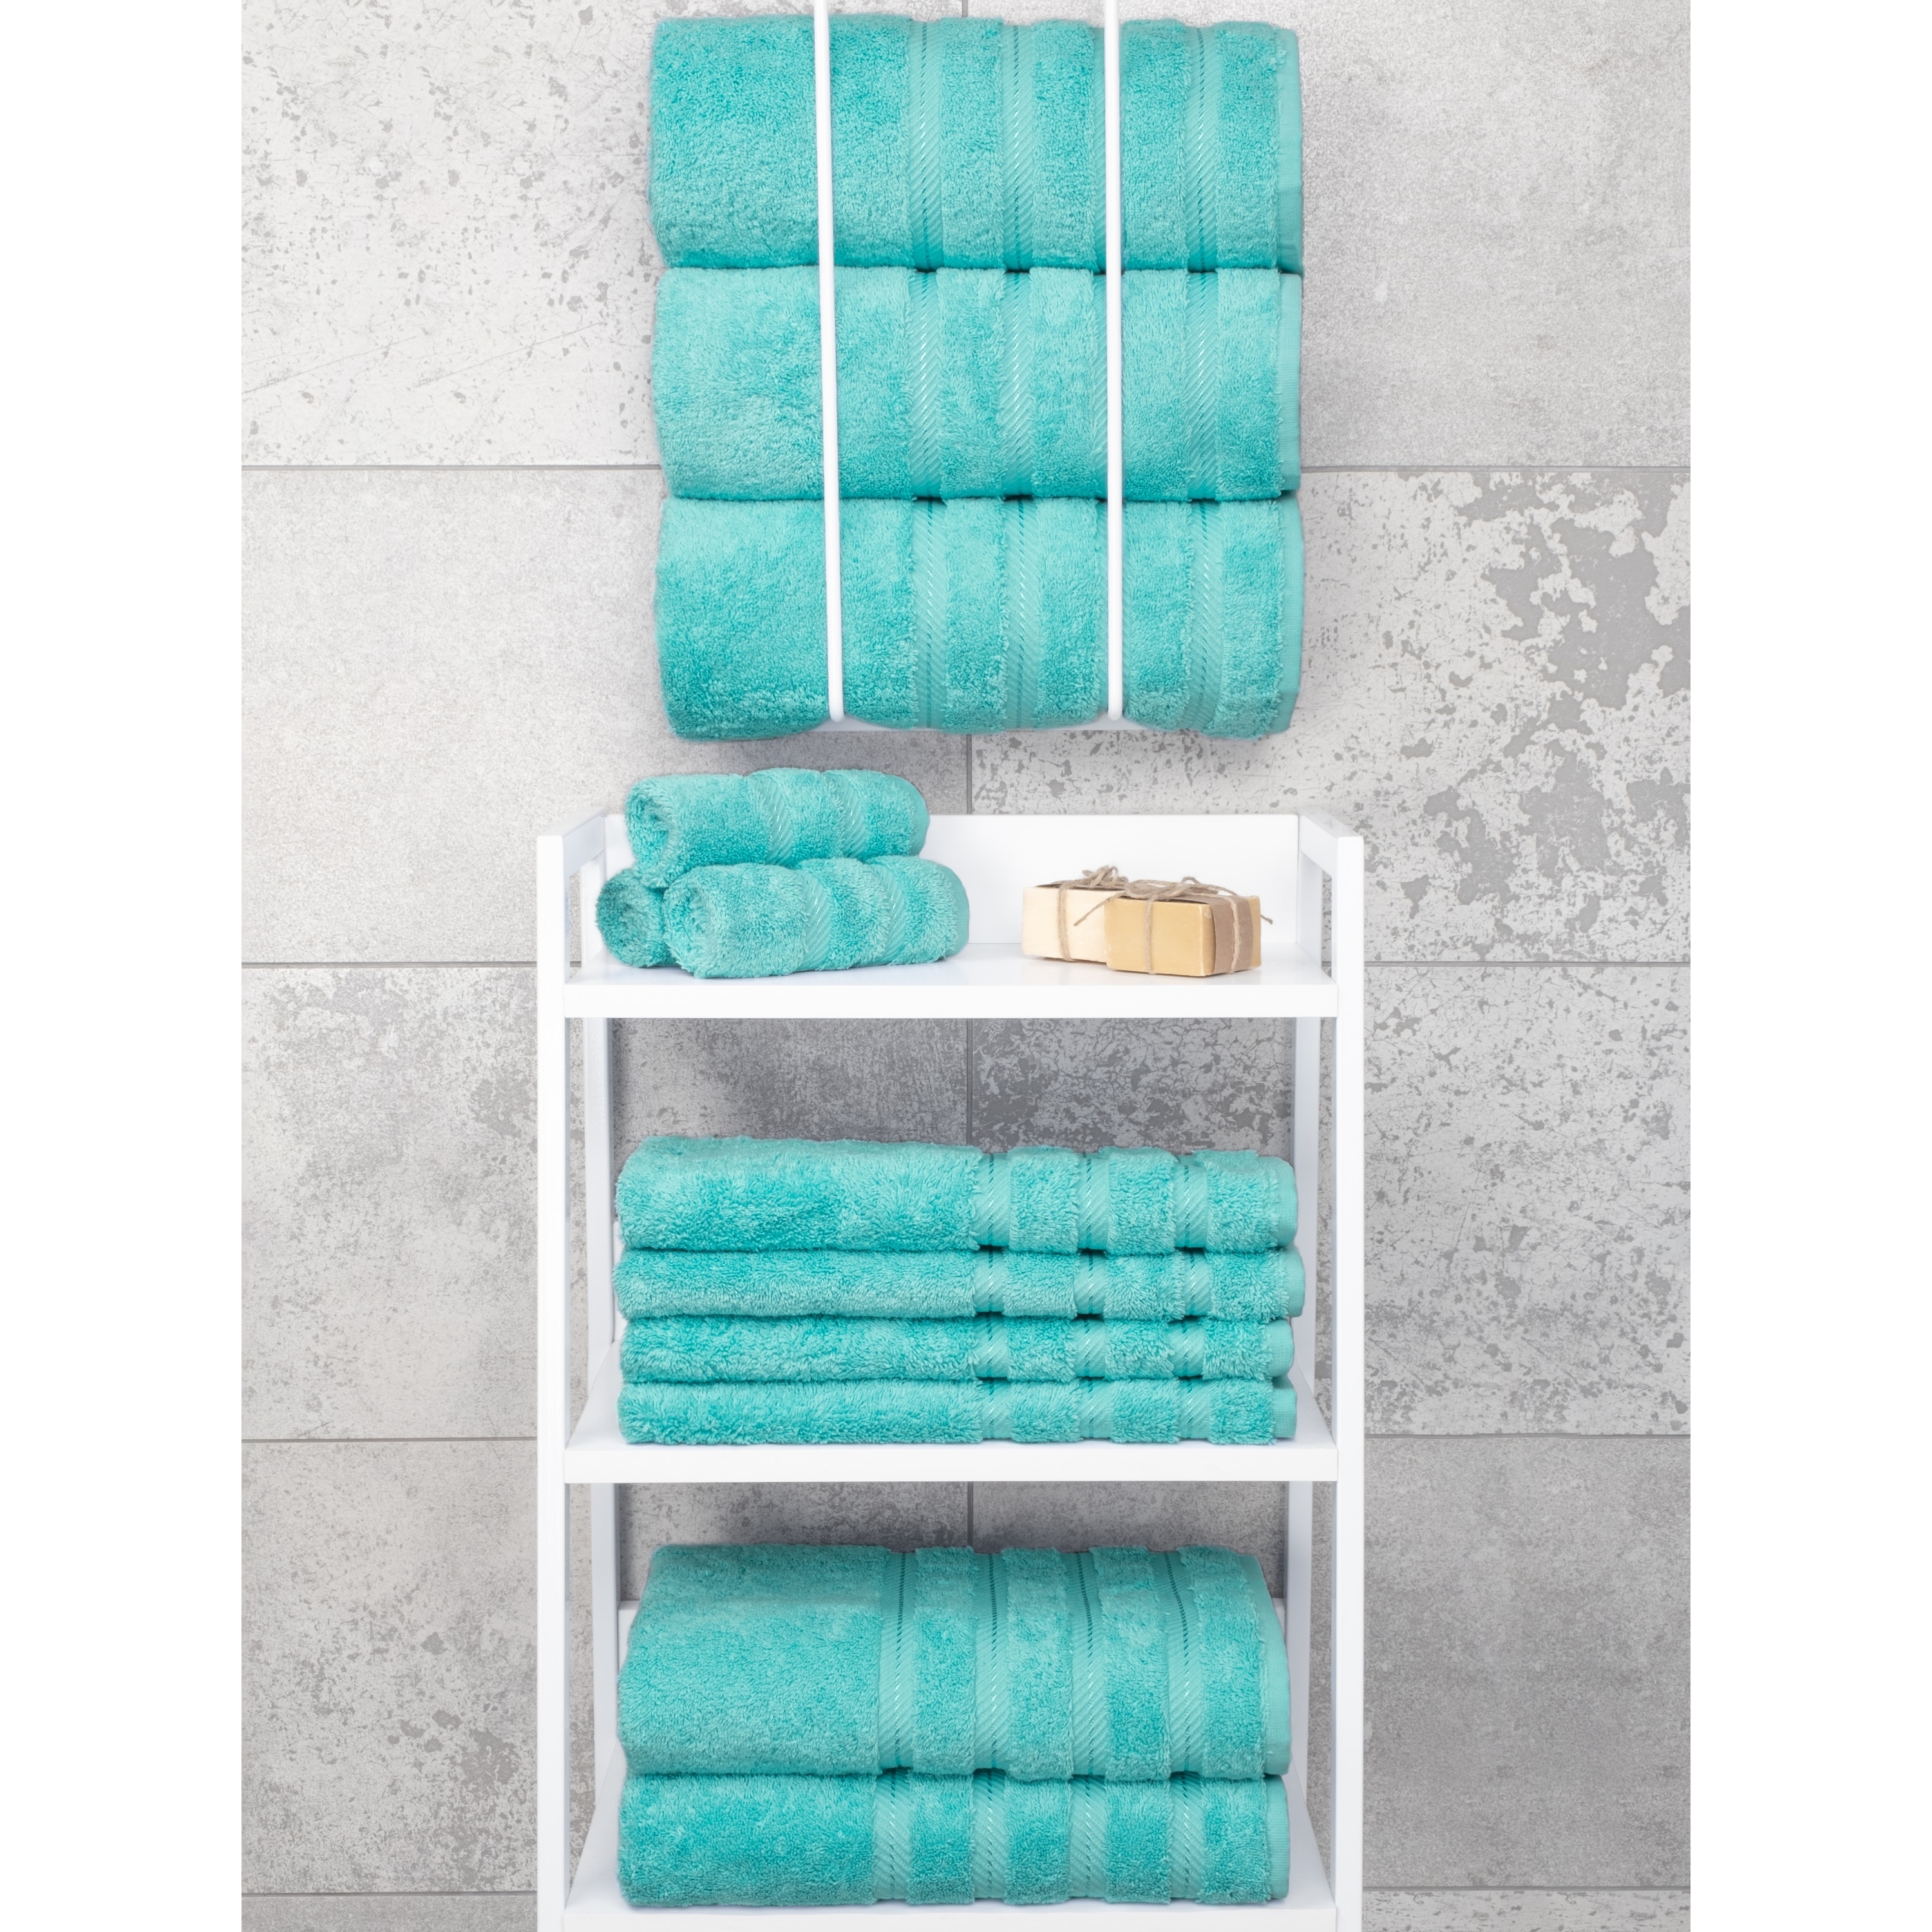 https://ak1.ostkcdn.com/images/products/is/images/direct/fa996175ee532c64845c57584d43961ed5911797/American-Soft-Linen-Turkish-Cotton-4-Piece-Bath-Towel-Set.jpg